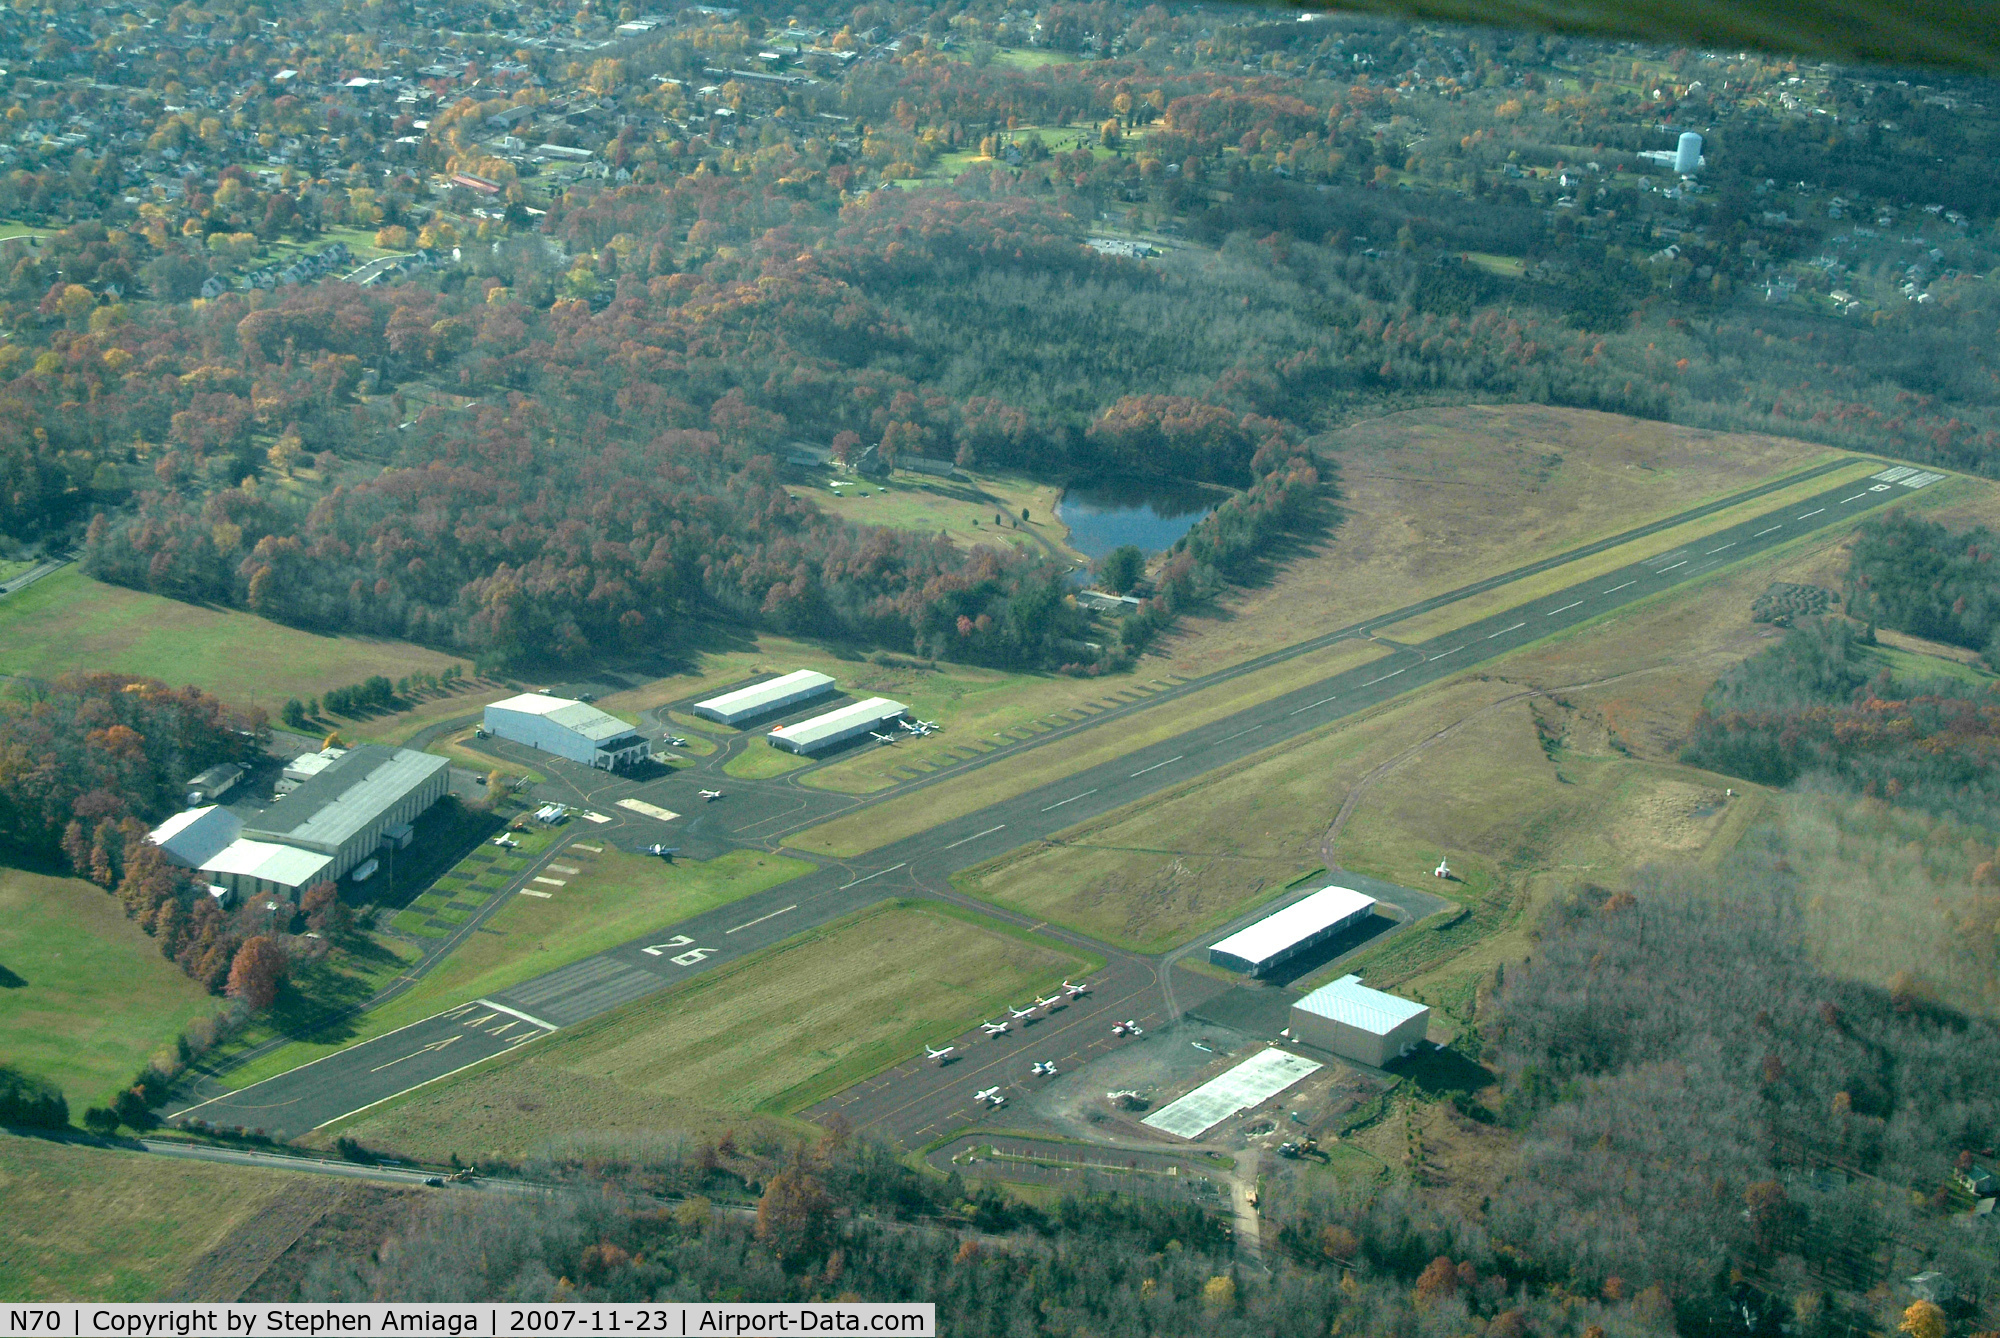 N70 Airport - Pennridge as seen from the NE